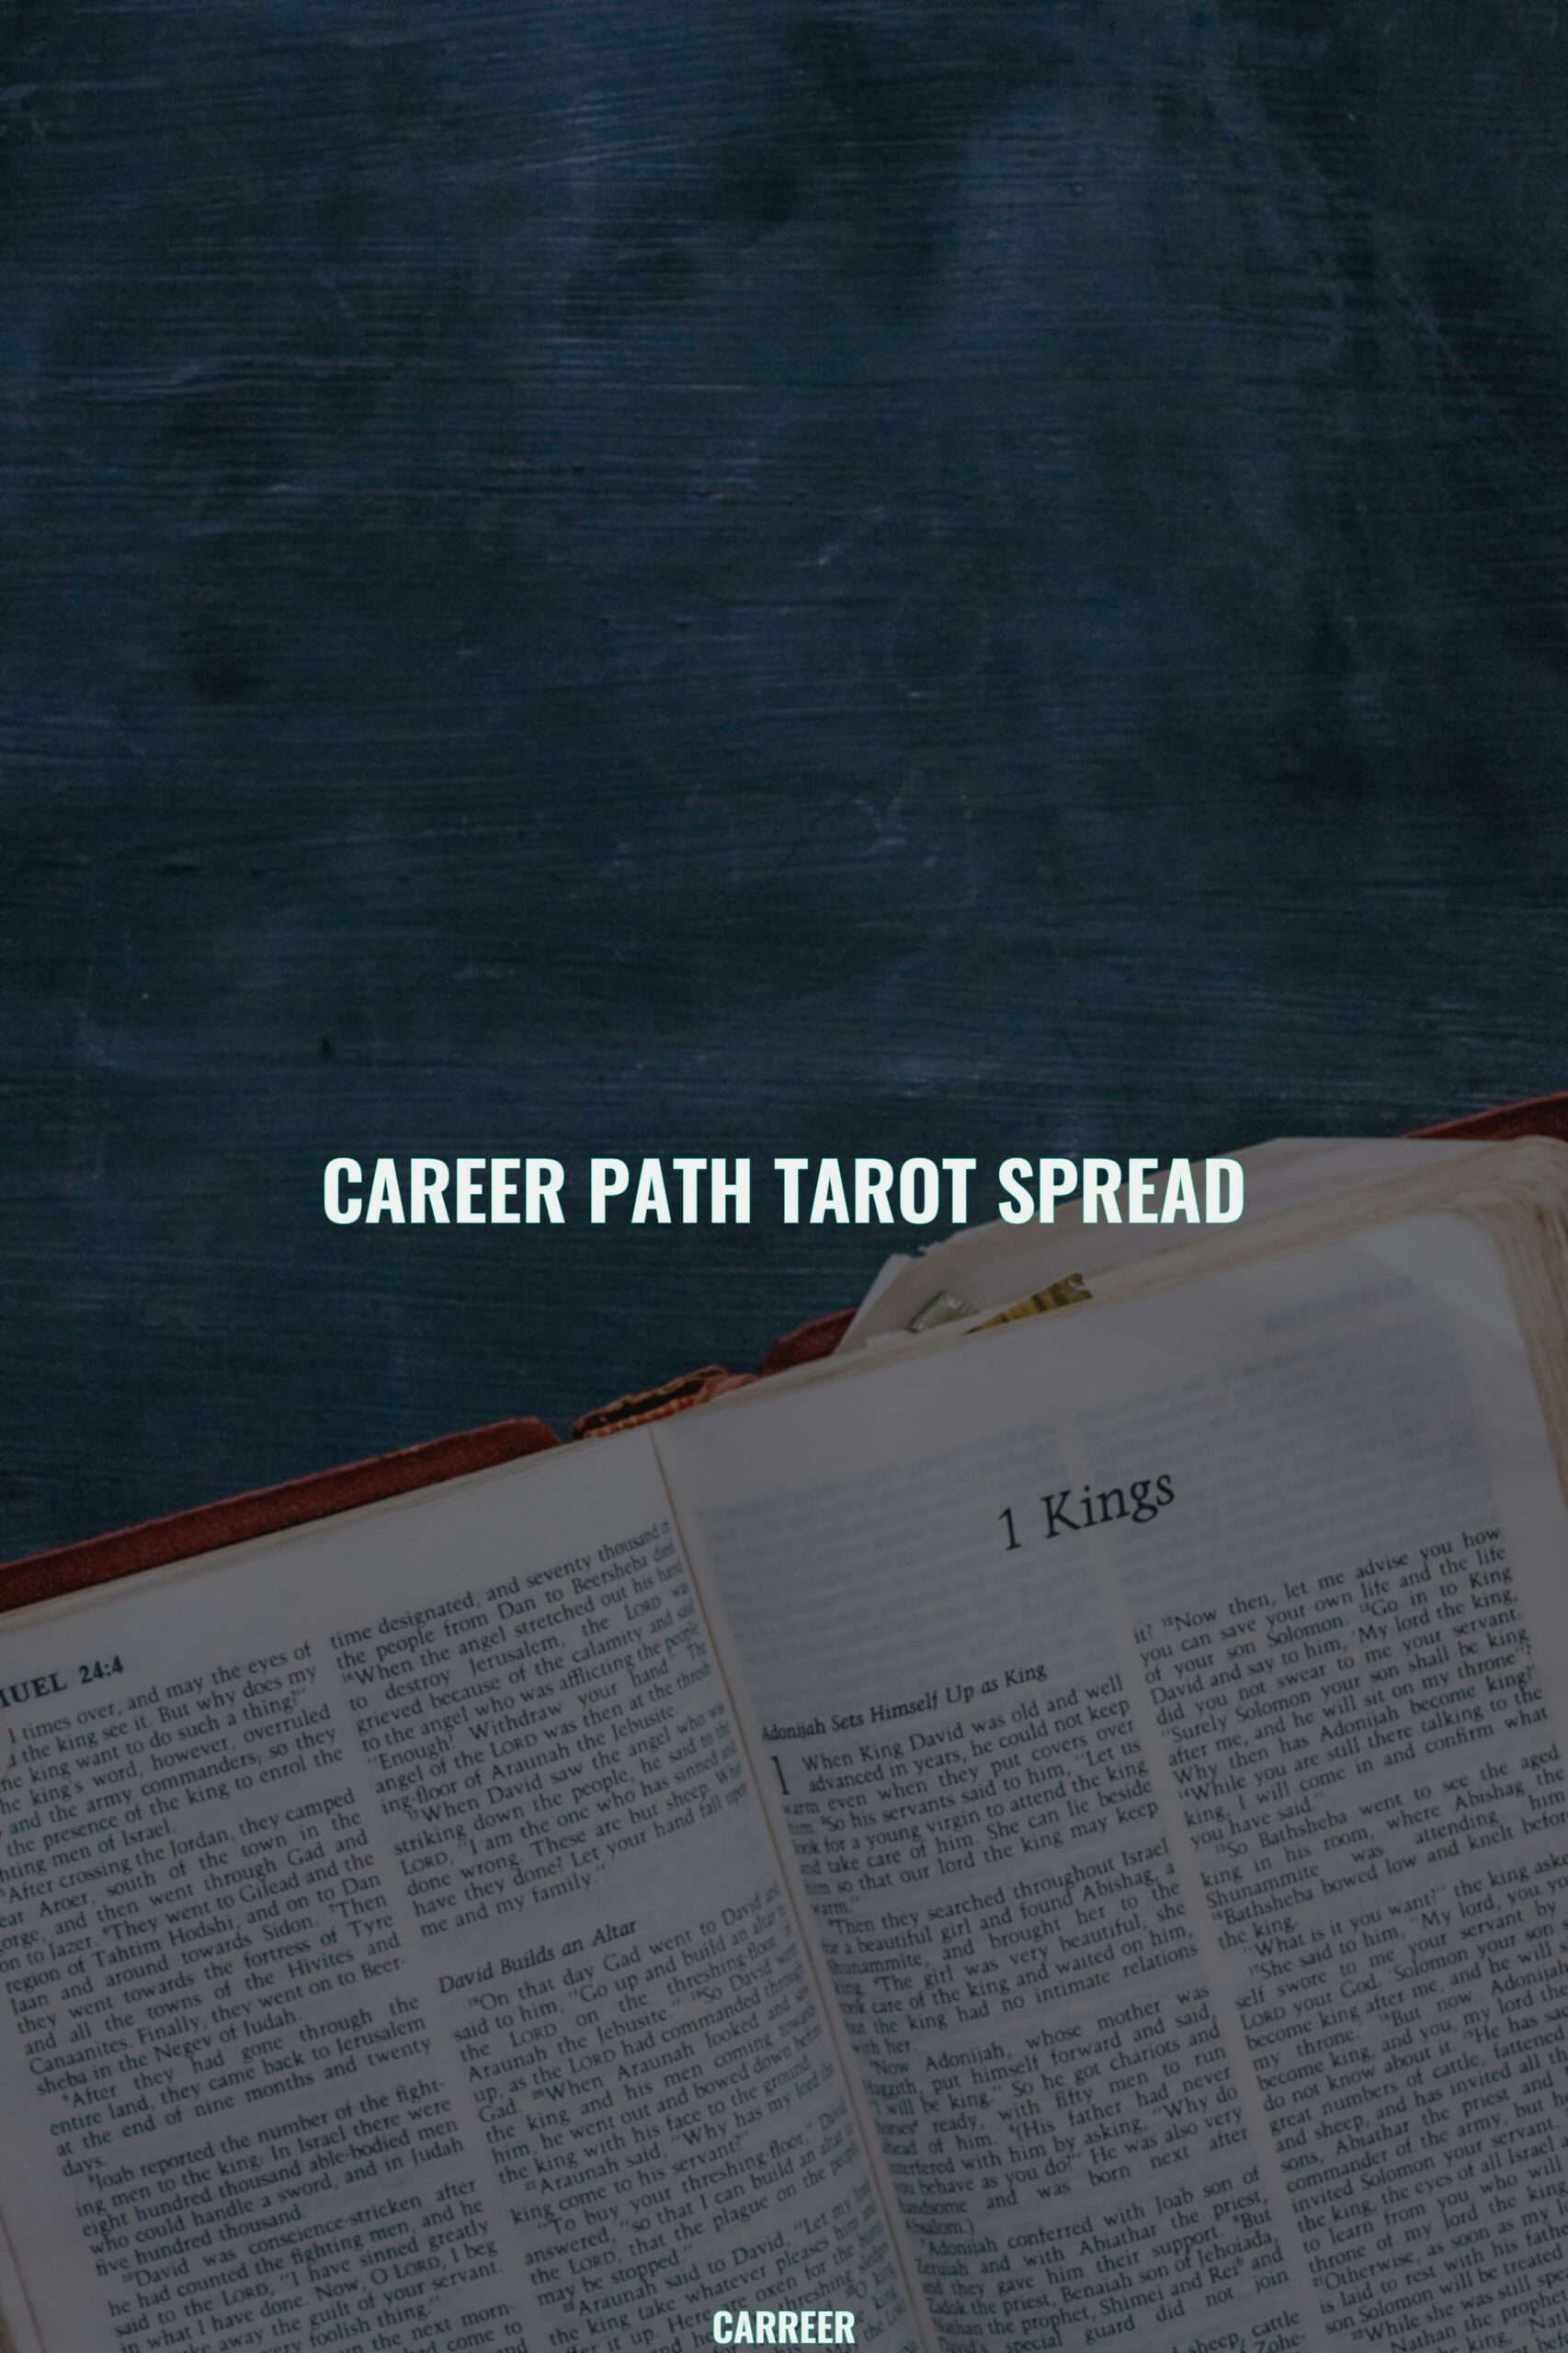 Career path tarot spread